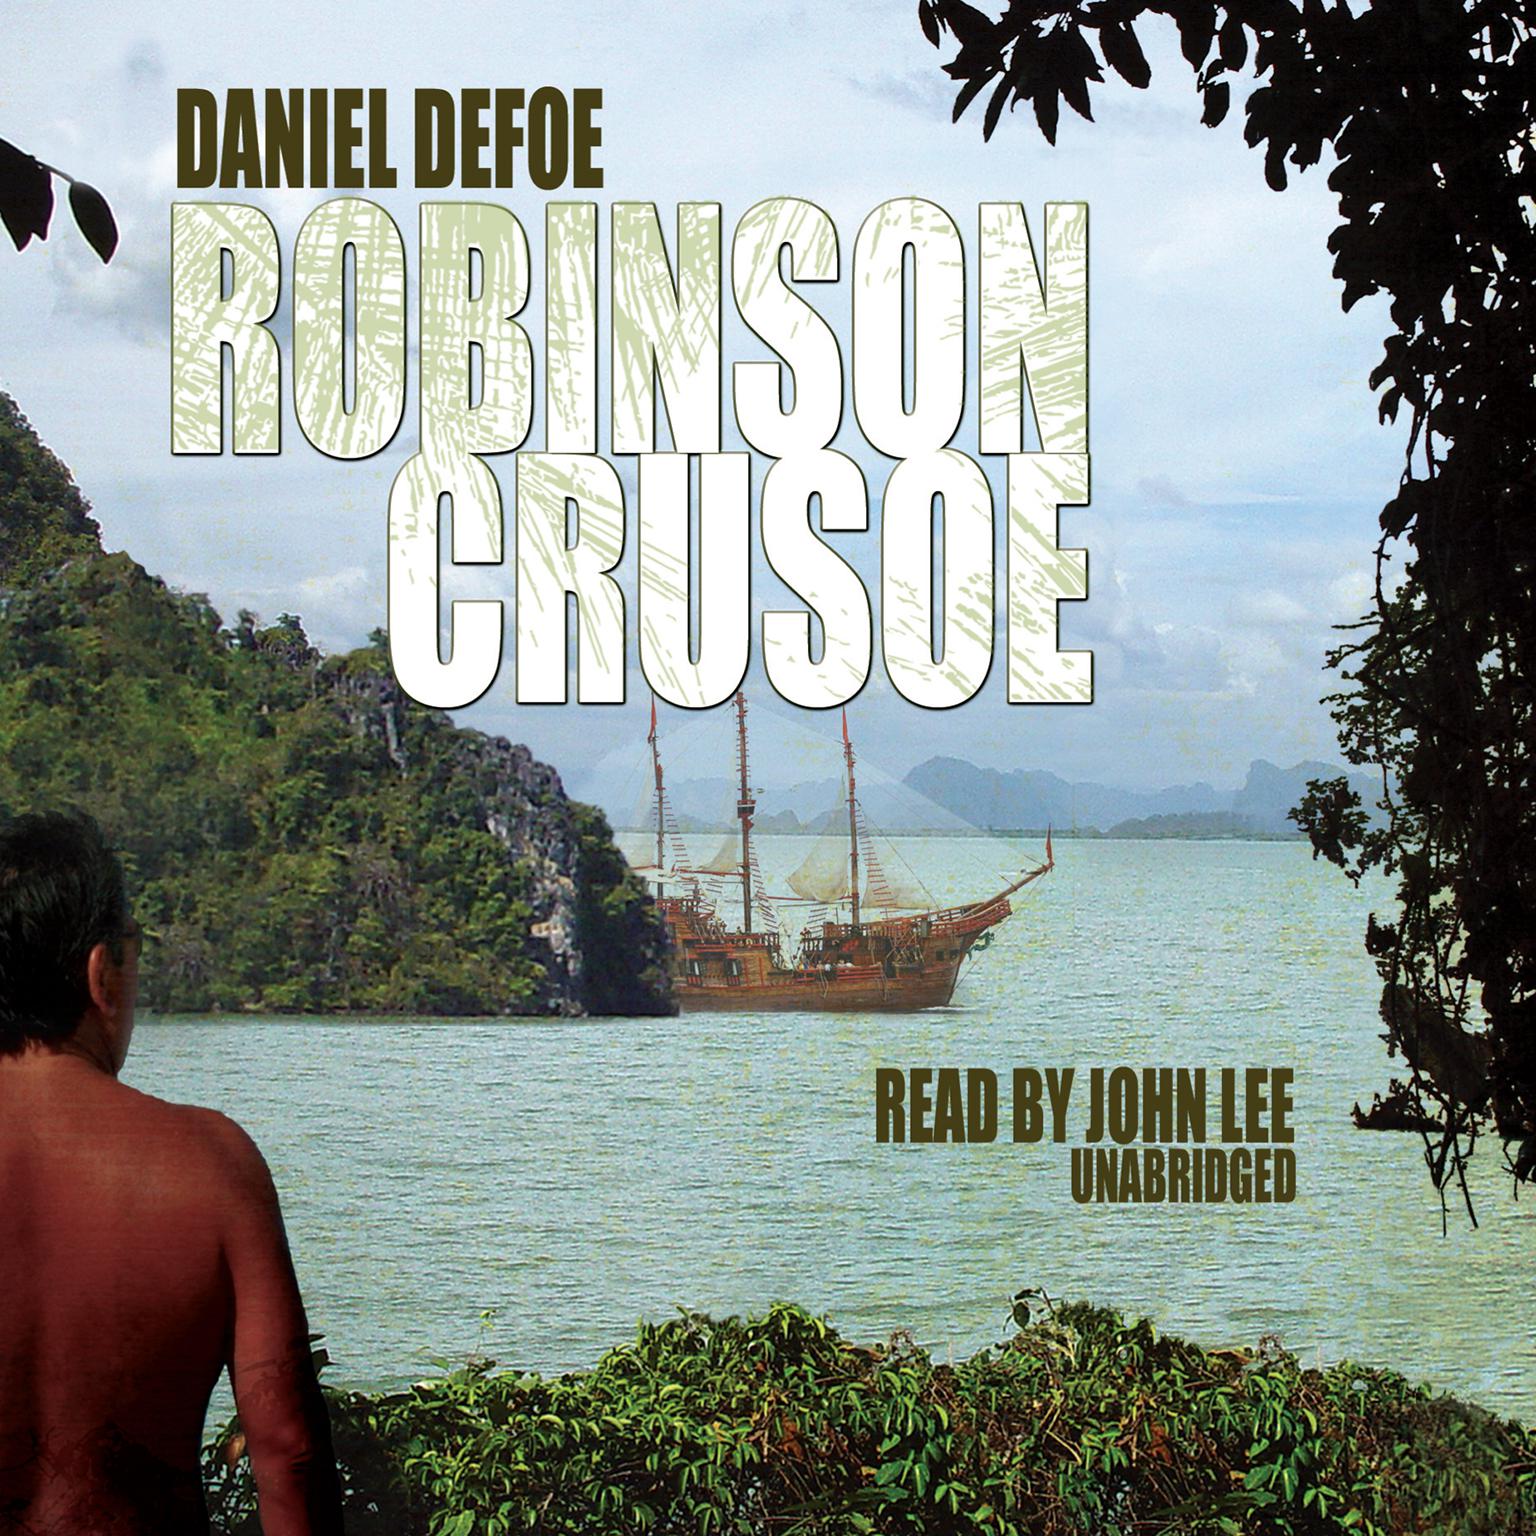 Robinson Crusoe Audiobook, by Daniel Defoe